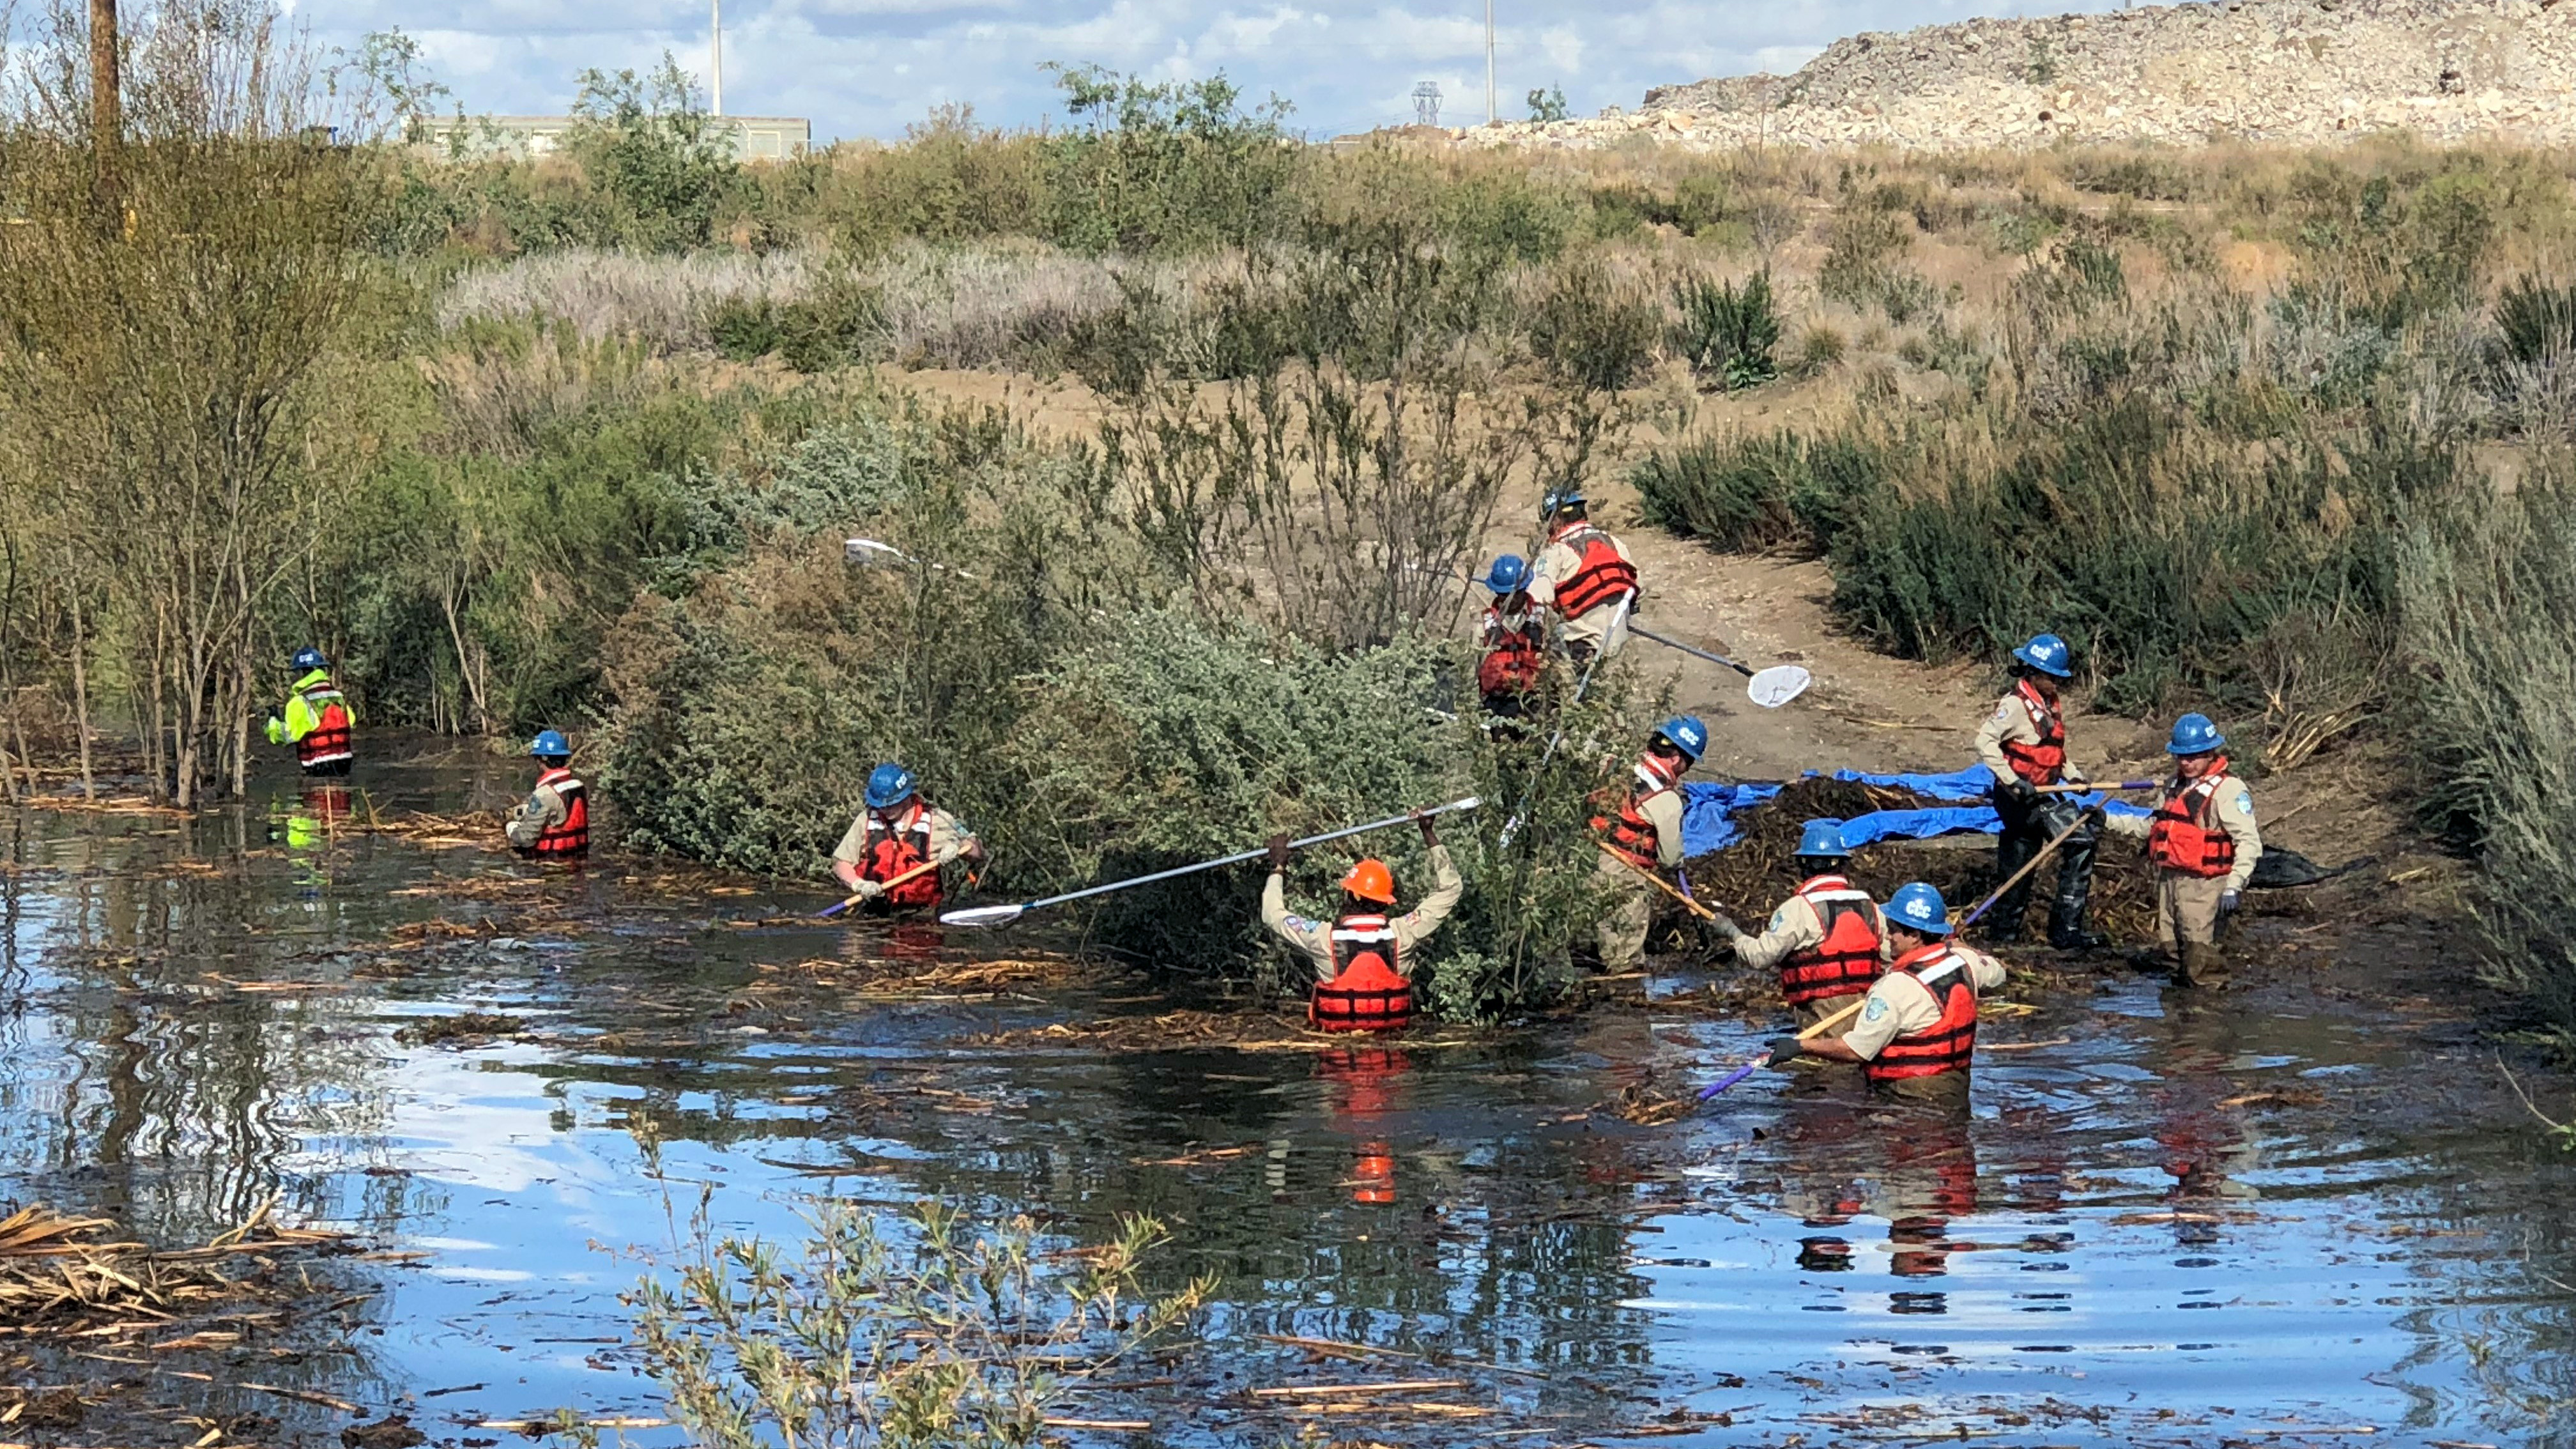 Pomona Crew 3 removing invasive species at Chino Creek Wetlands.